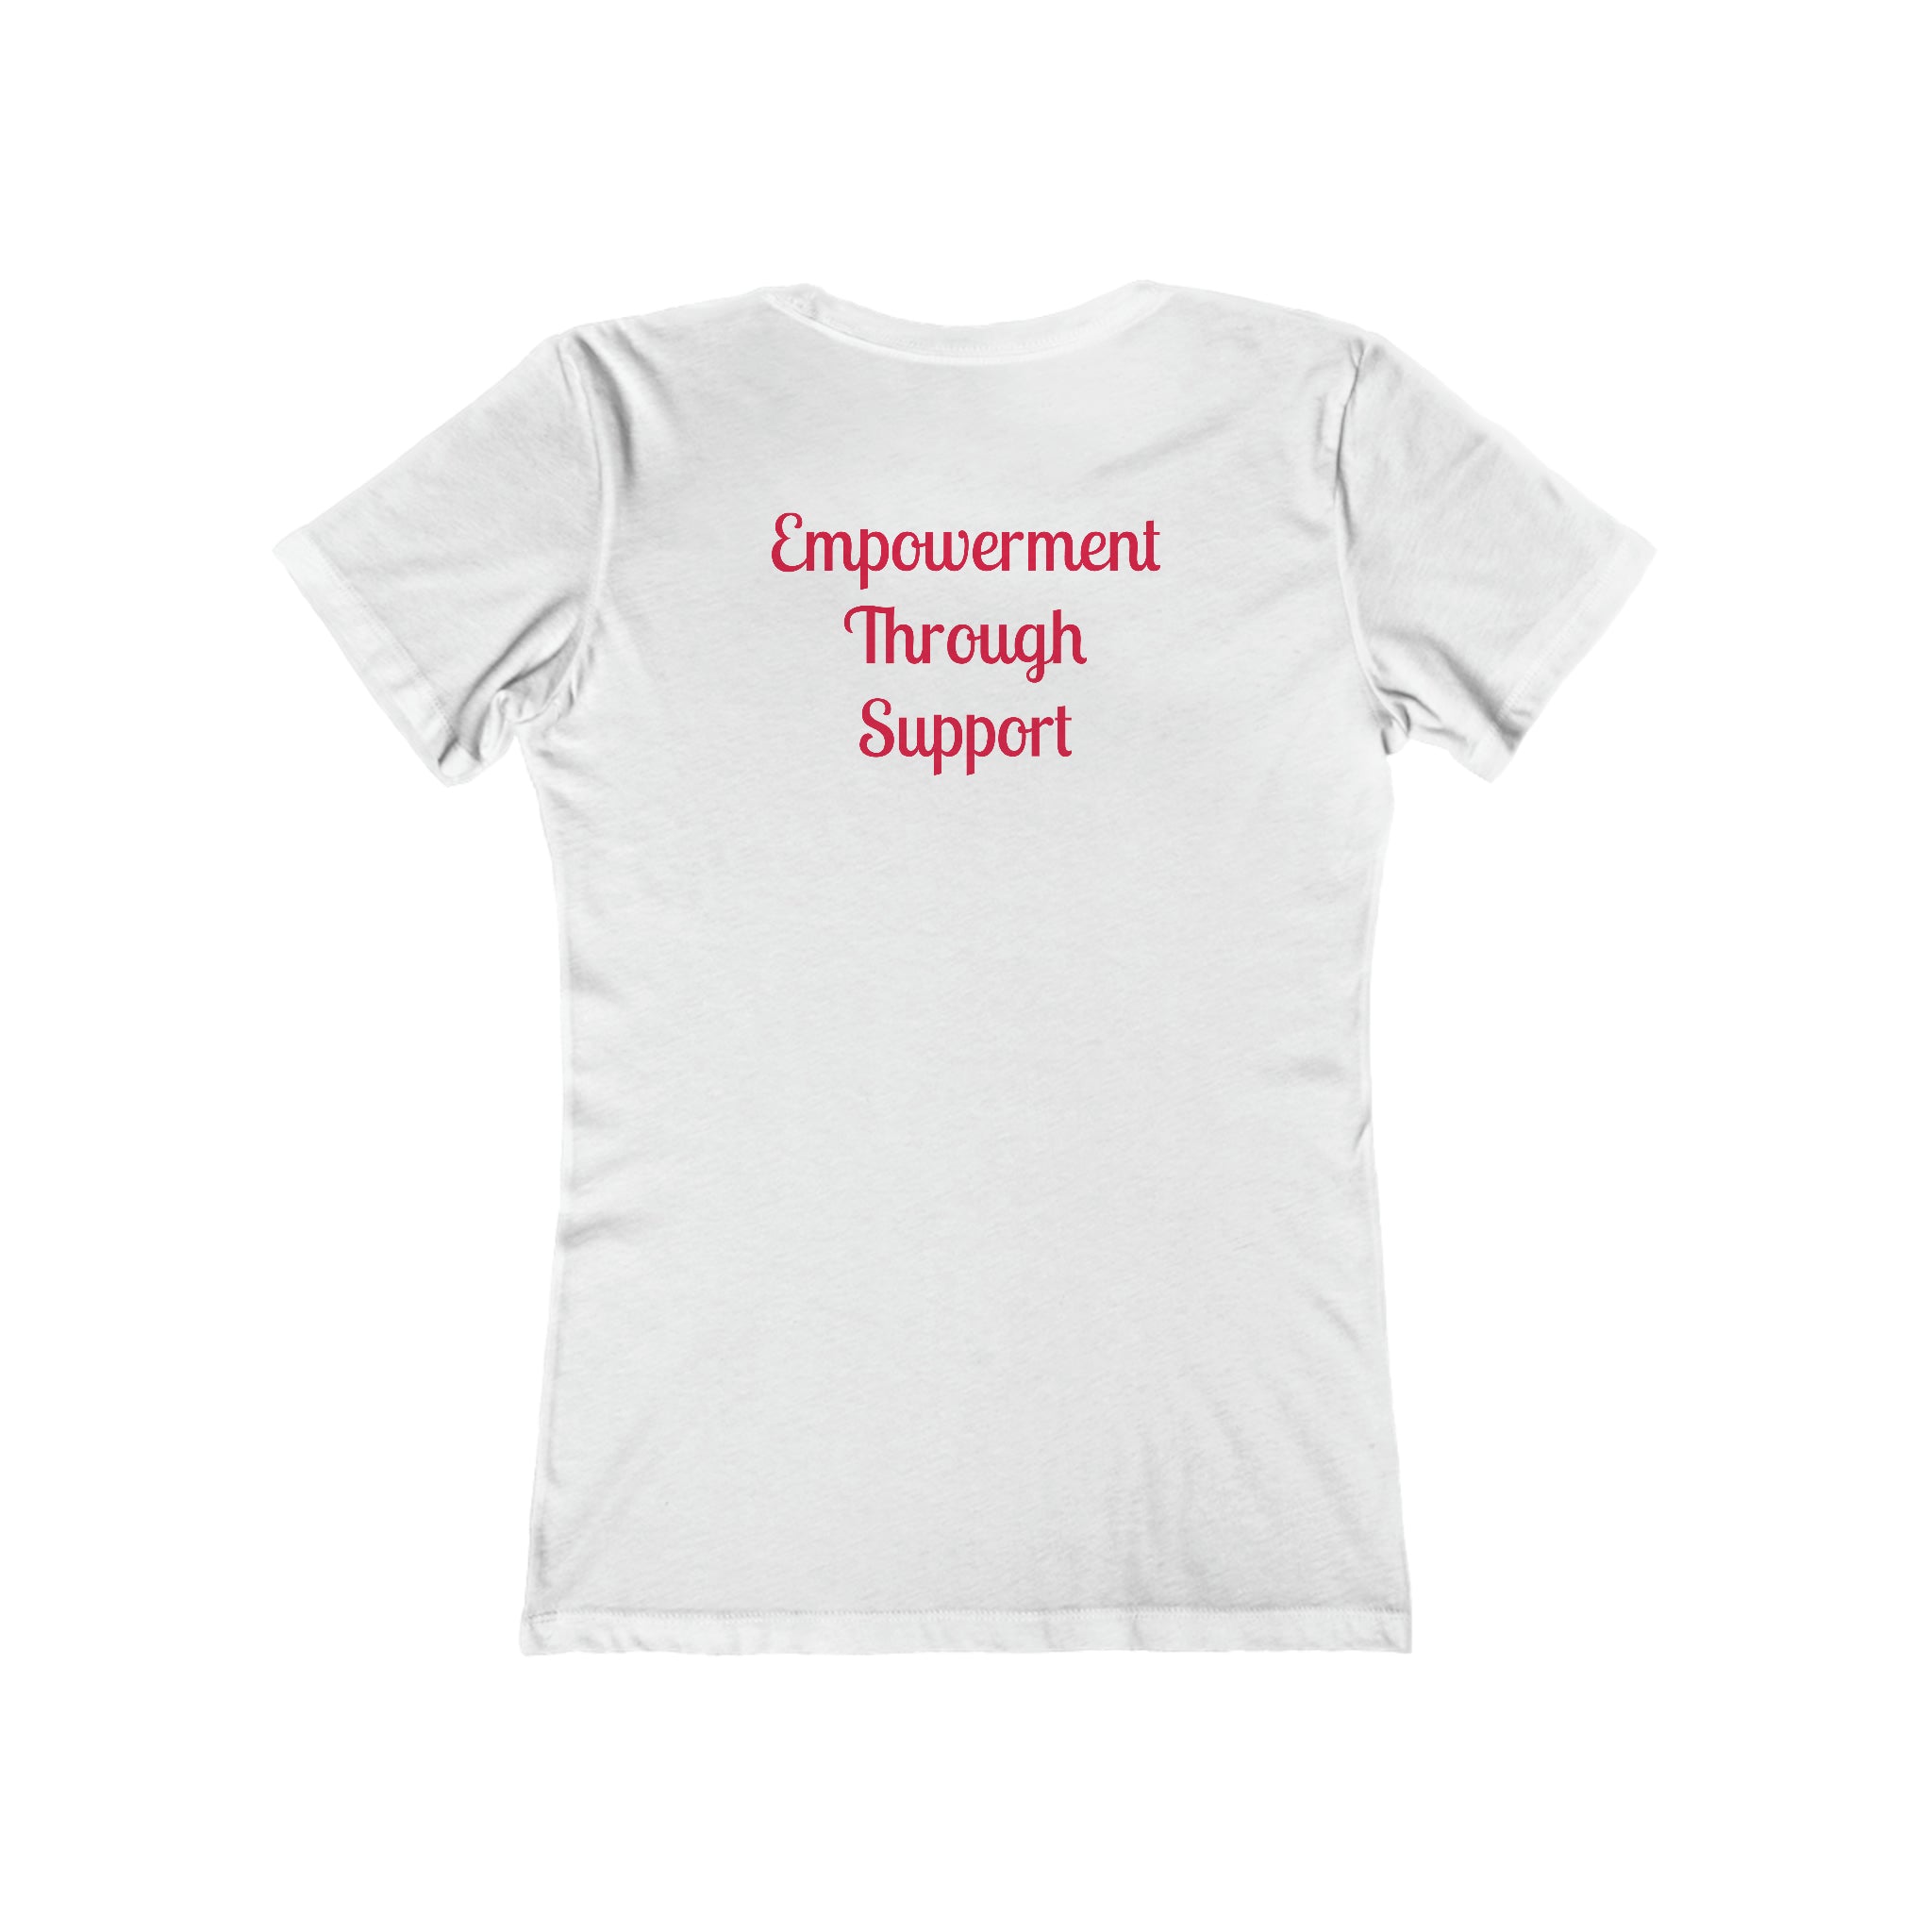 Empowerment Through Support Boyfriend Tee Solid White Awareness Break the Stigma Mental Health Support Pledge Donation slim fit shirt Tee women shirt T-Shirt 3846750420948365537_2048_aa51c0fa-fea1-4d77-9d1d-7e4aa401b928 Printify